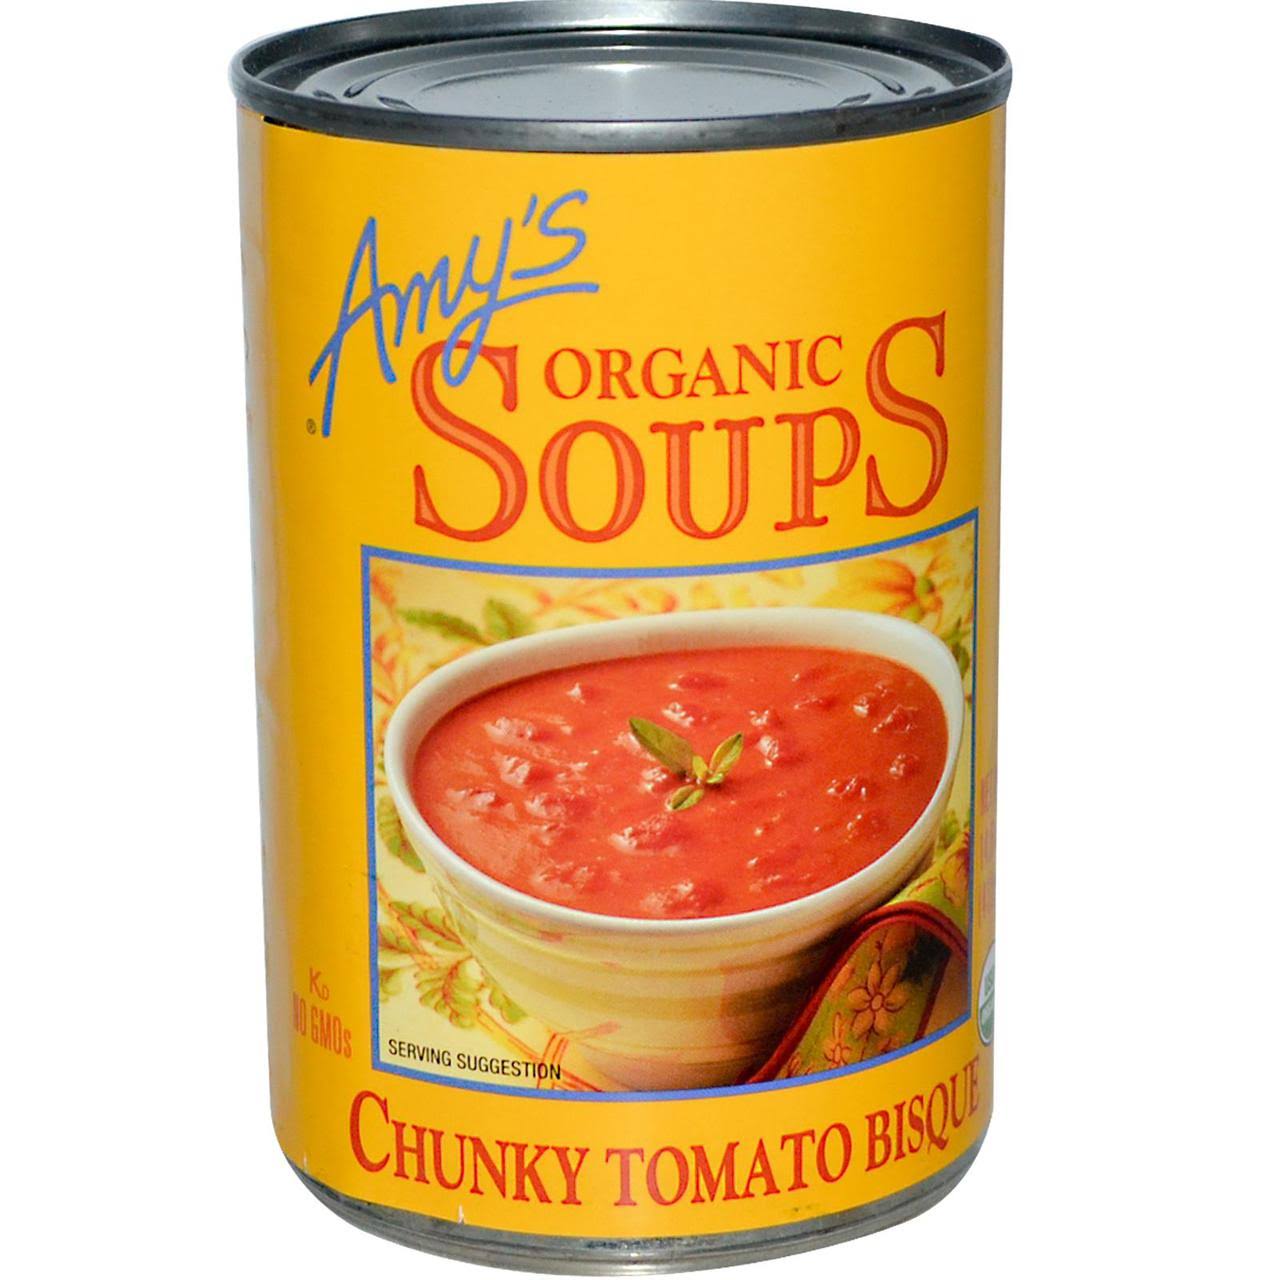 Amy's Organic Soups - Chunky Tomato Bisque, 14.5oz